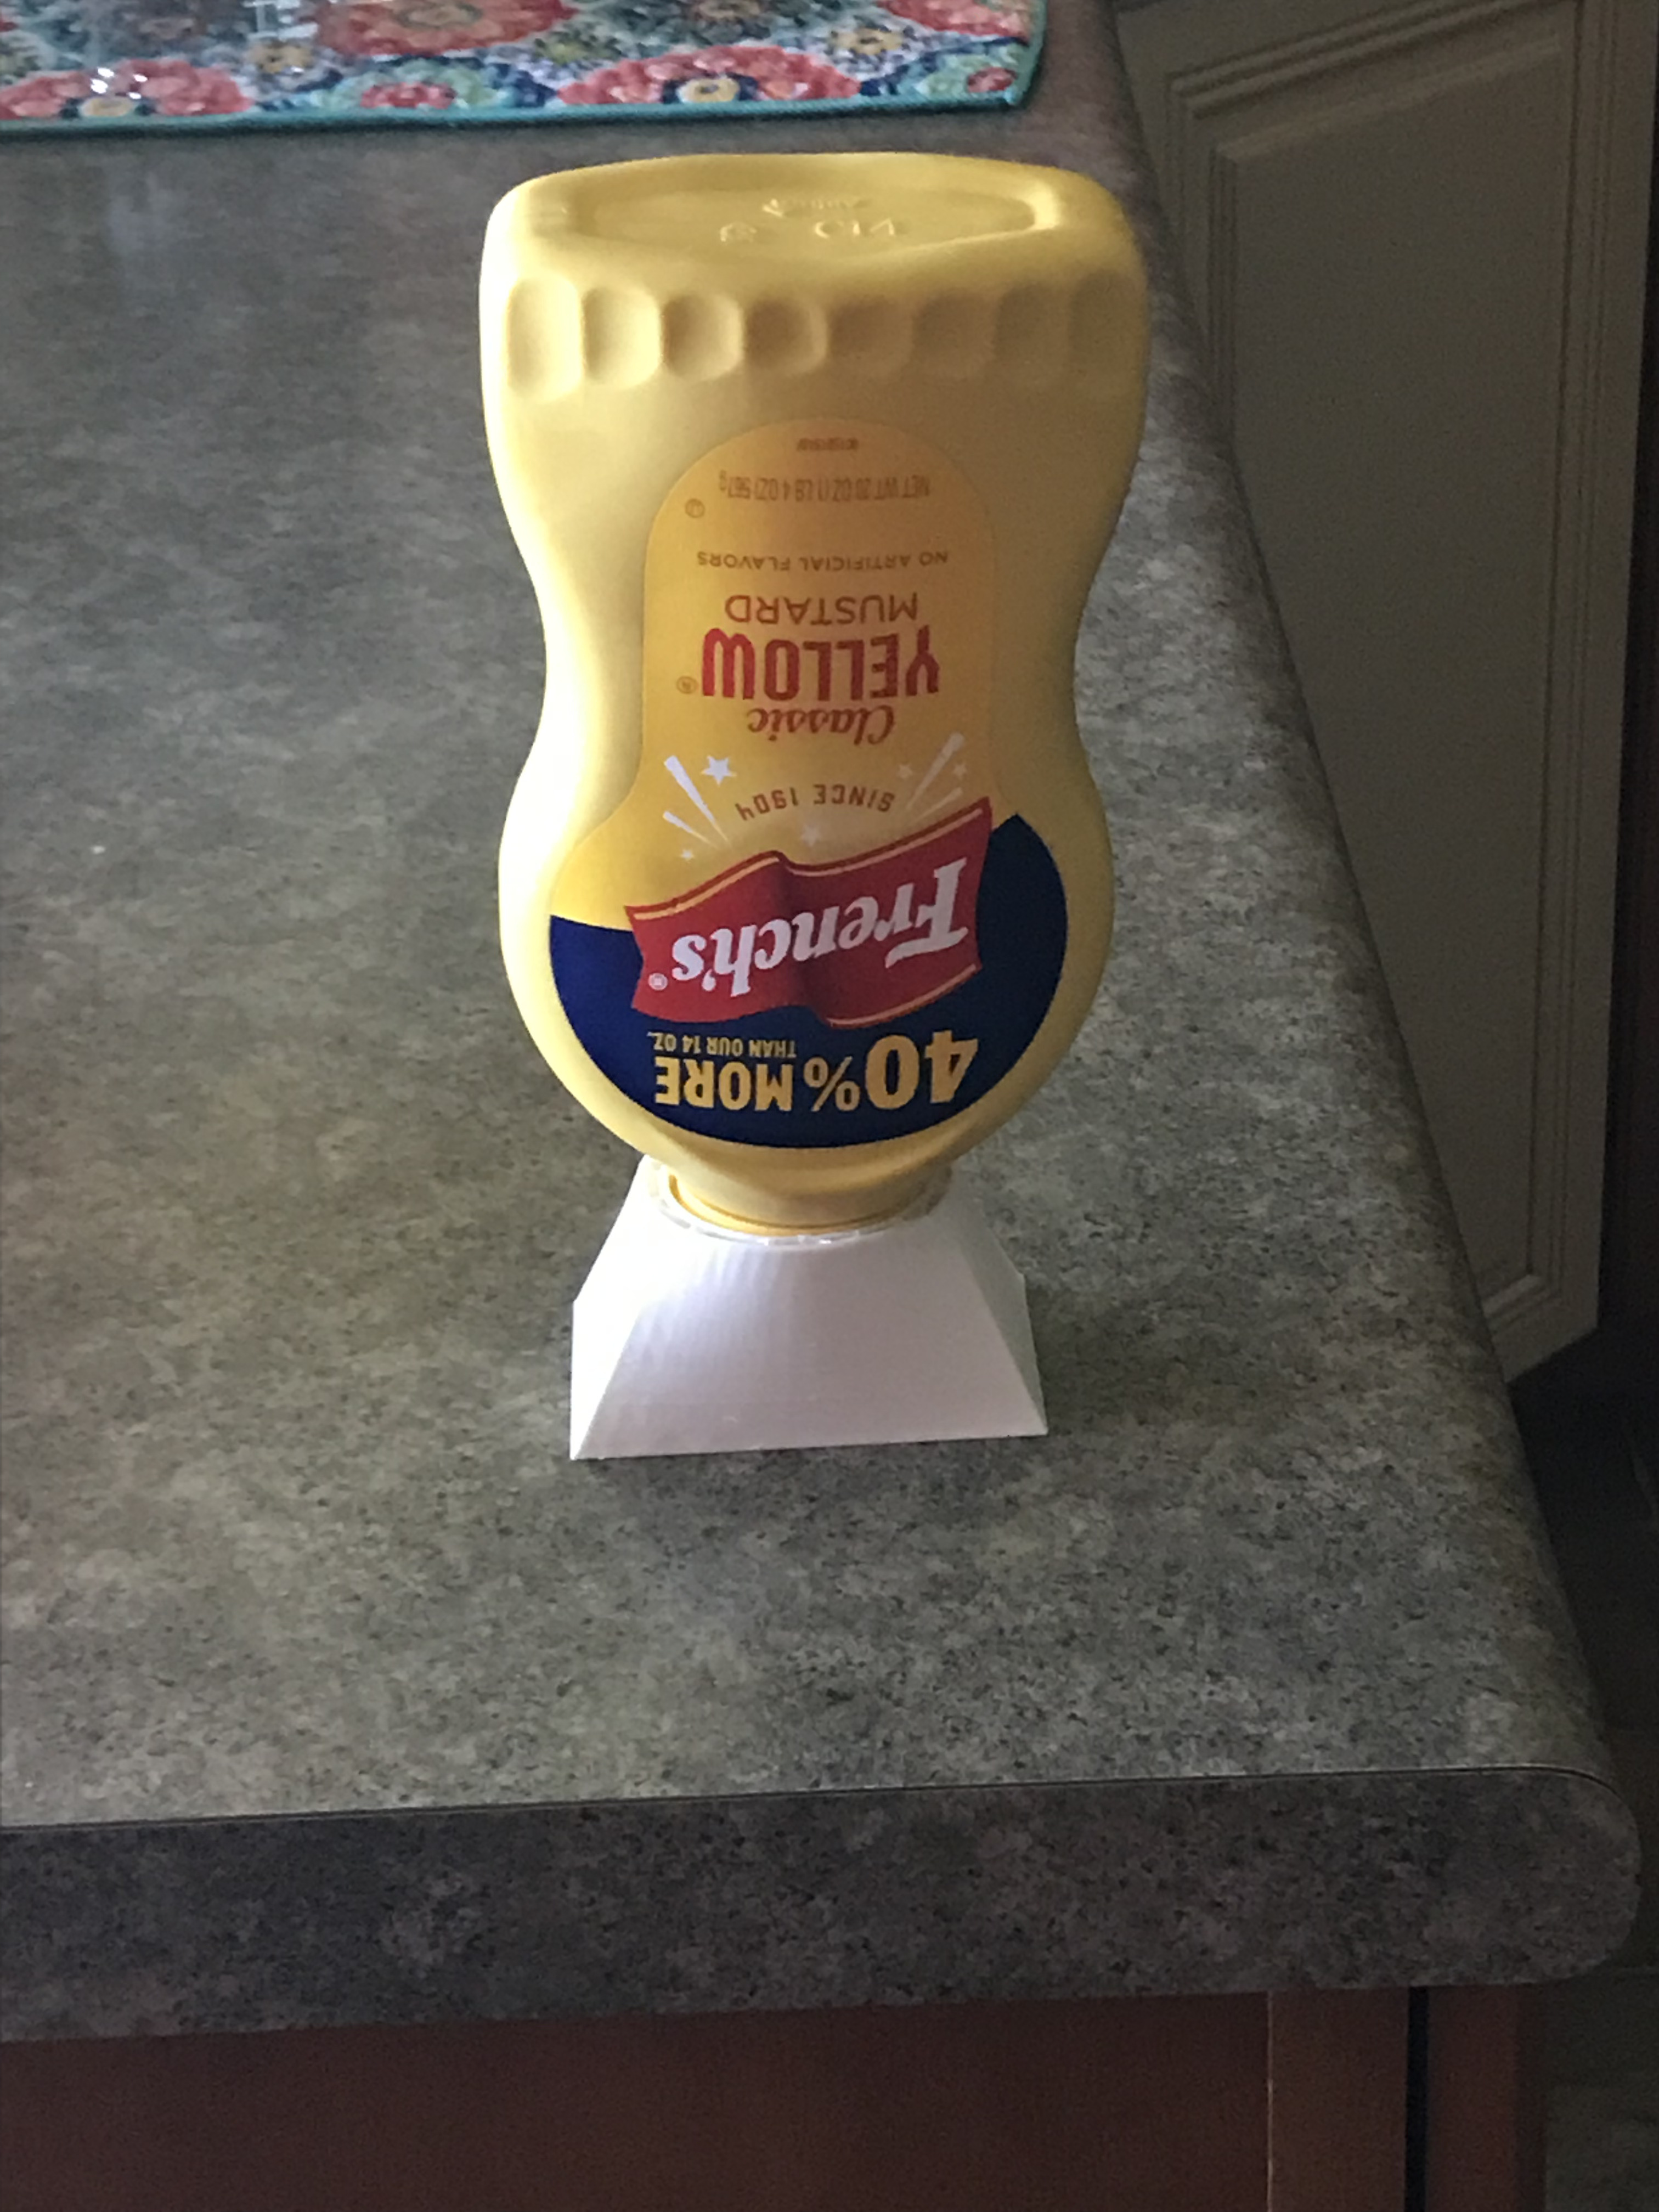 French's Mustard holder